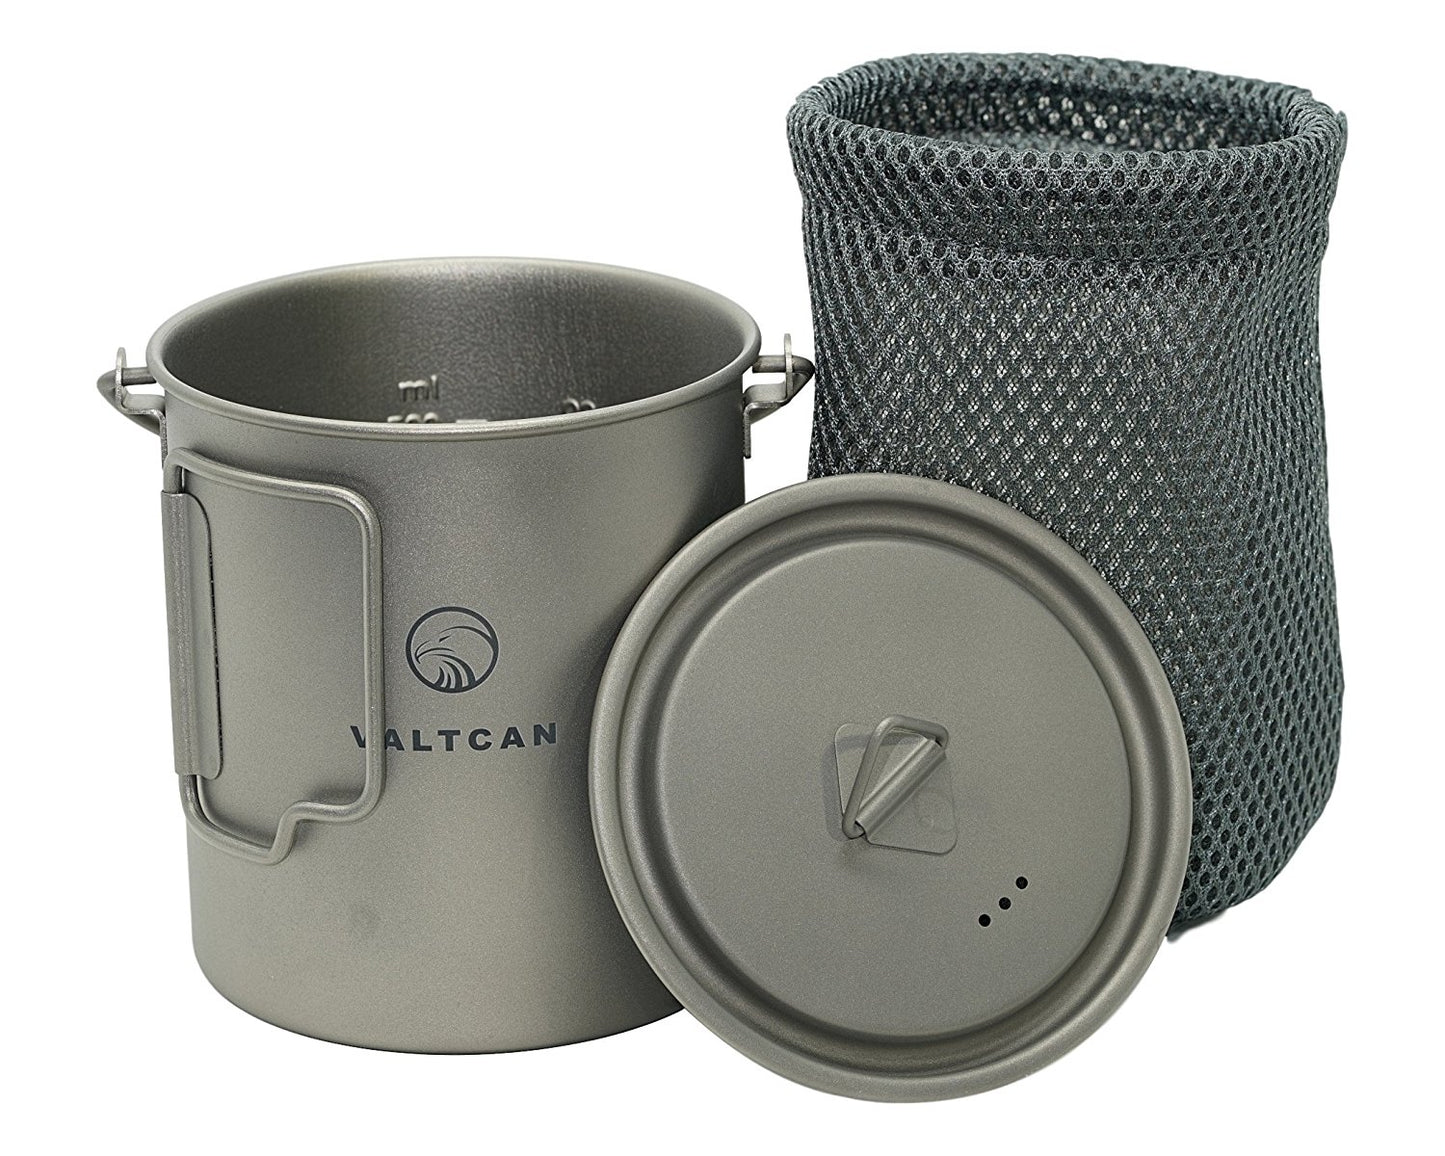 Valtcan Titanium Camping Pot 750ml with Handles 128g